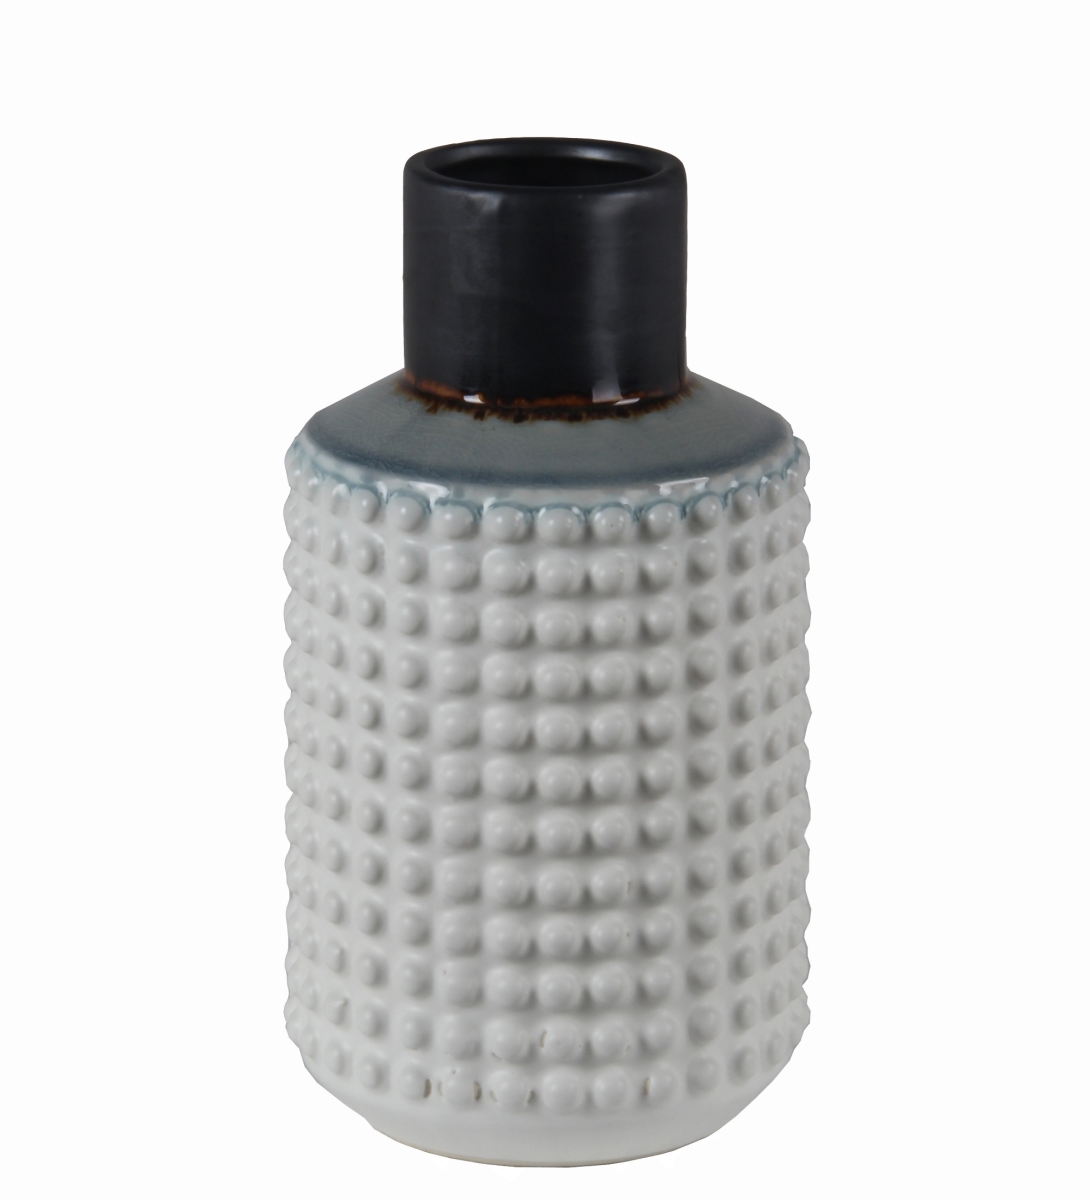 78174 Ceramic Vase, White - Large